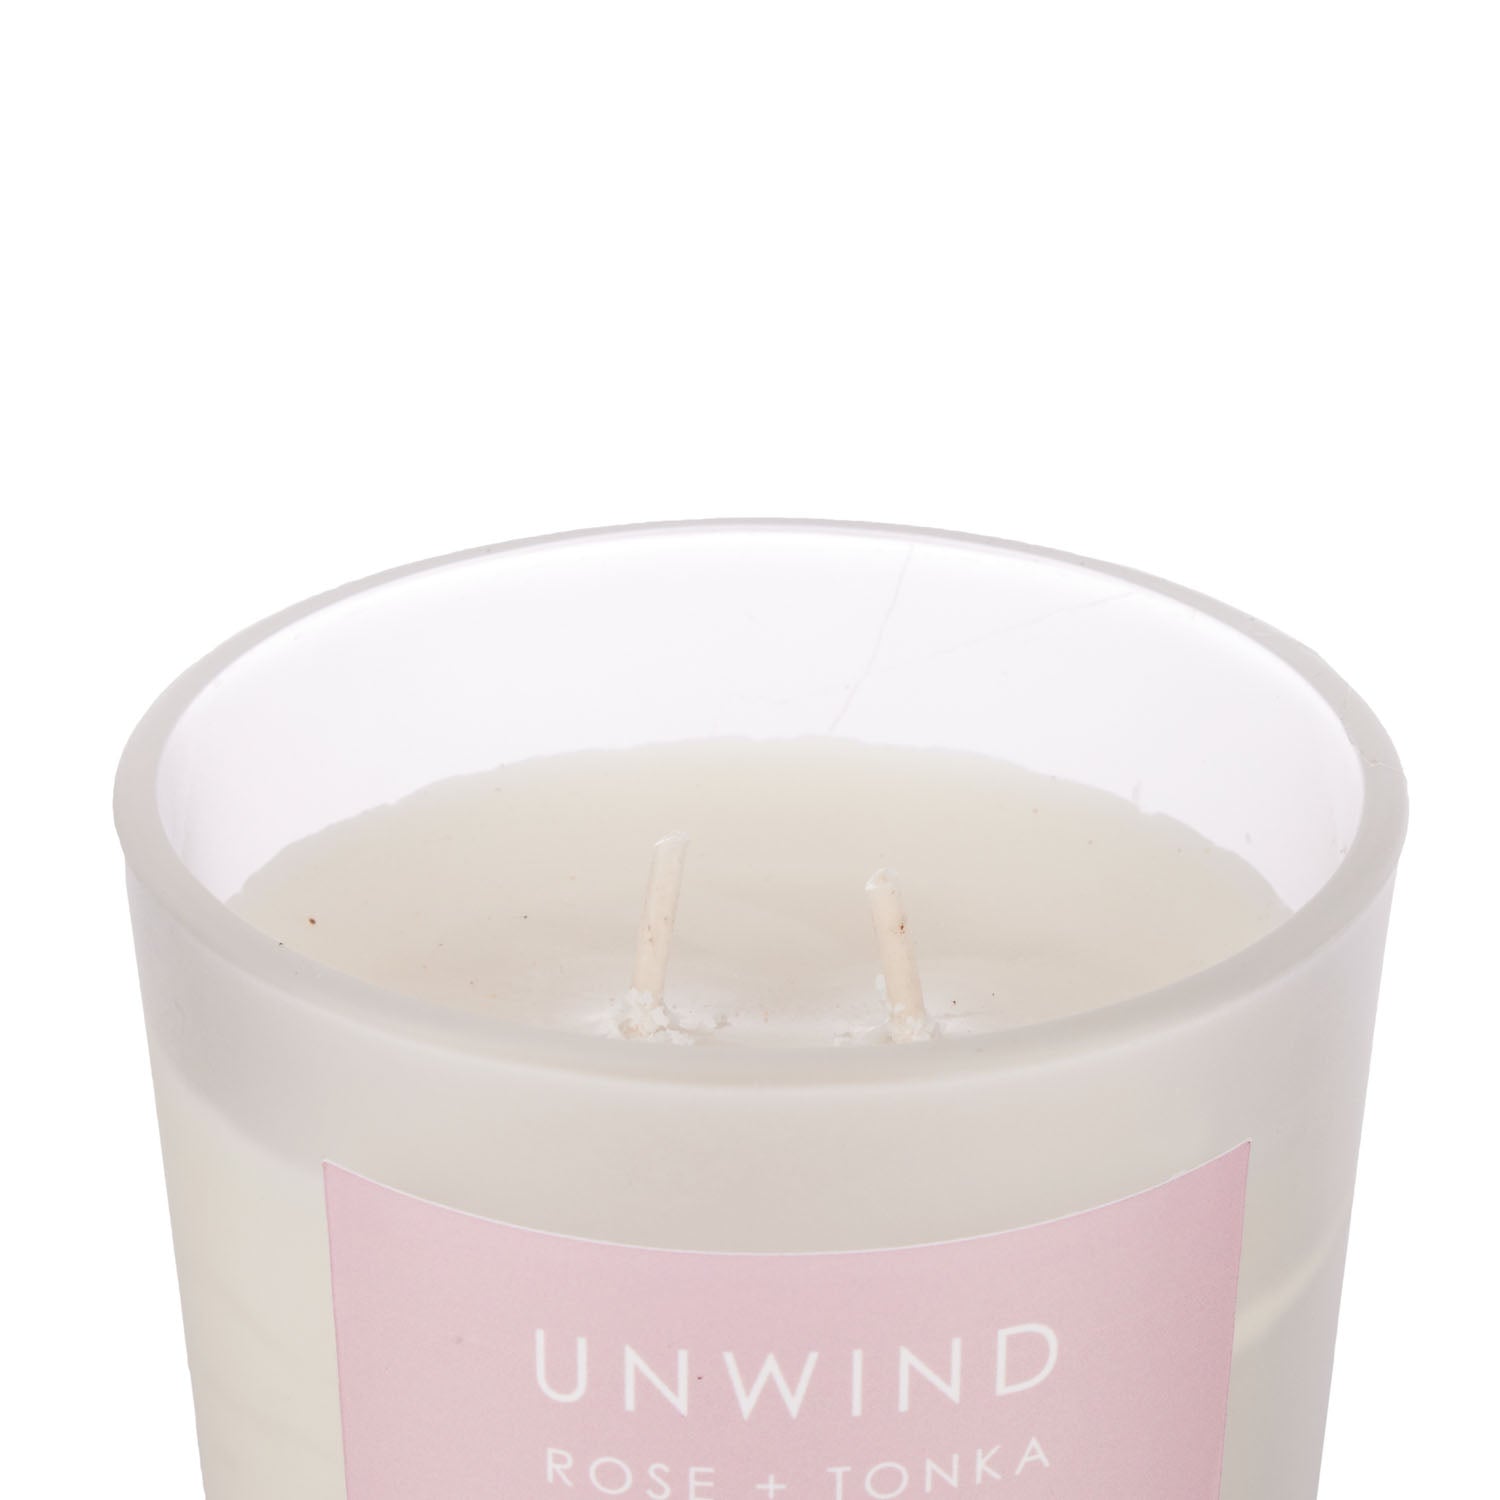 Pier 1 Unwind Rose & Tonka Aromatherapy 9.5 oz Candle - Jar Candles